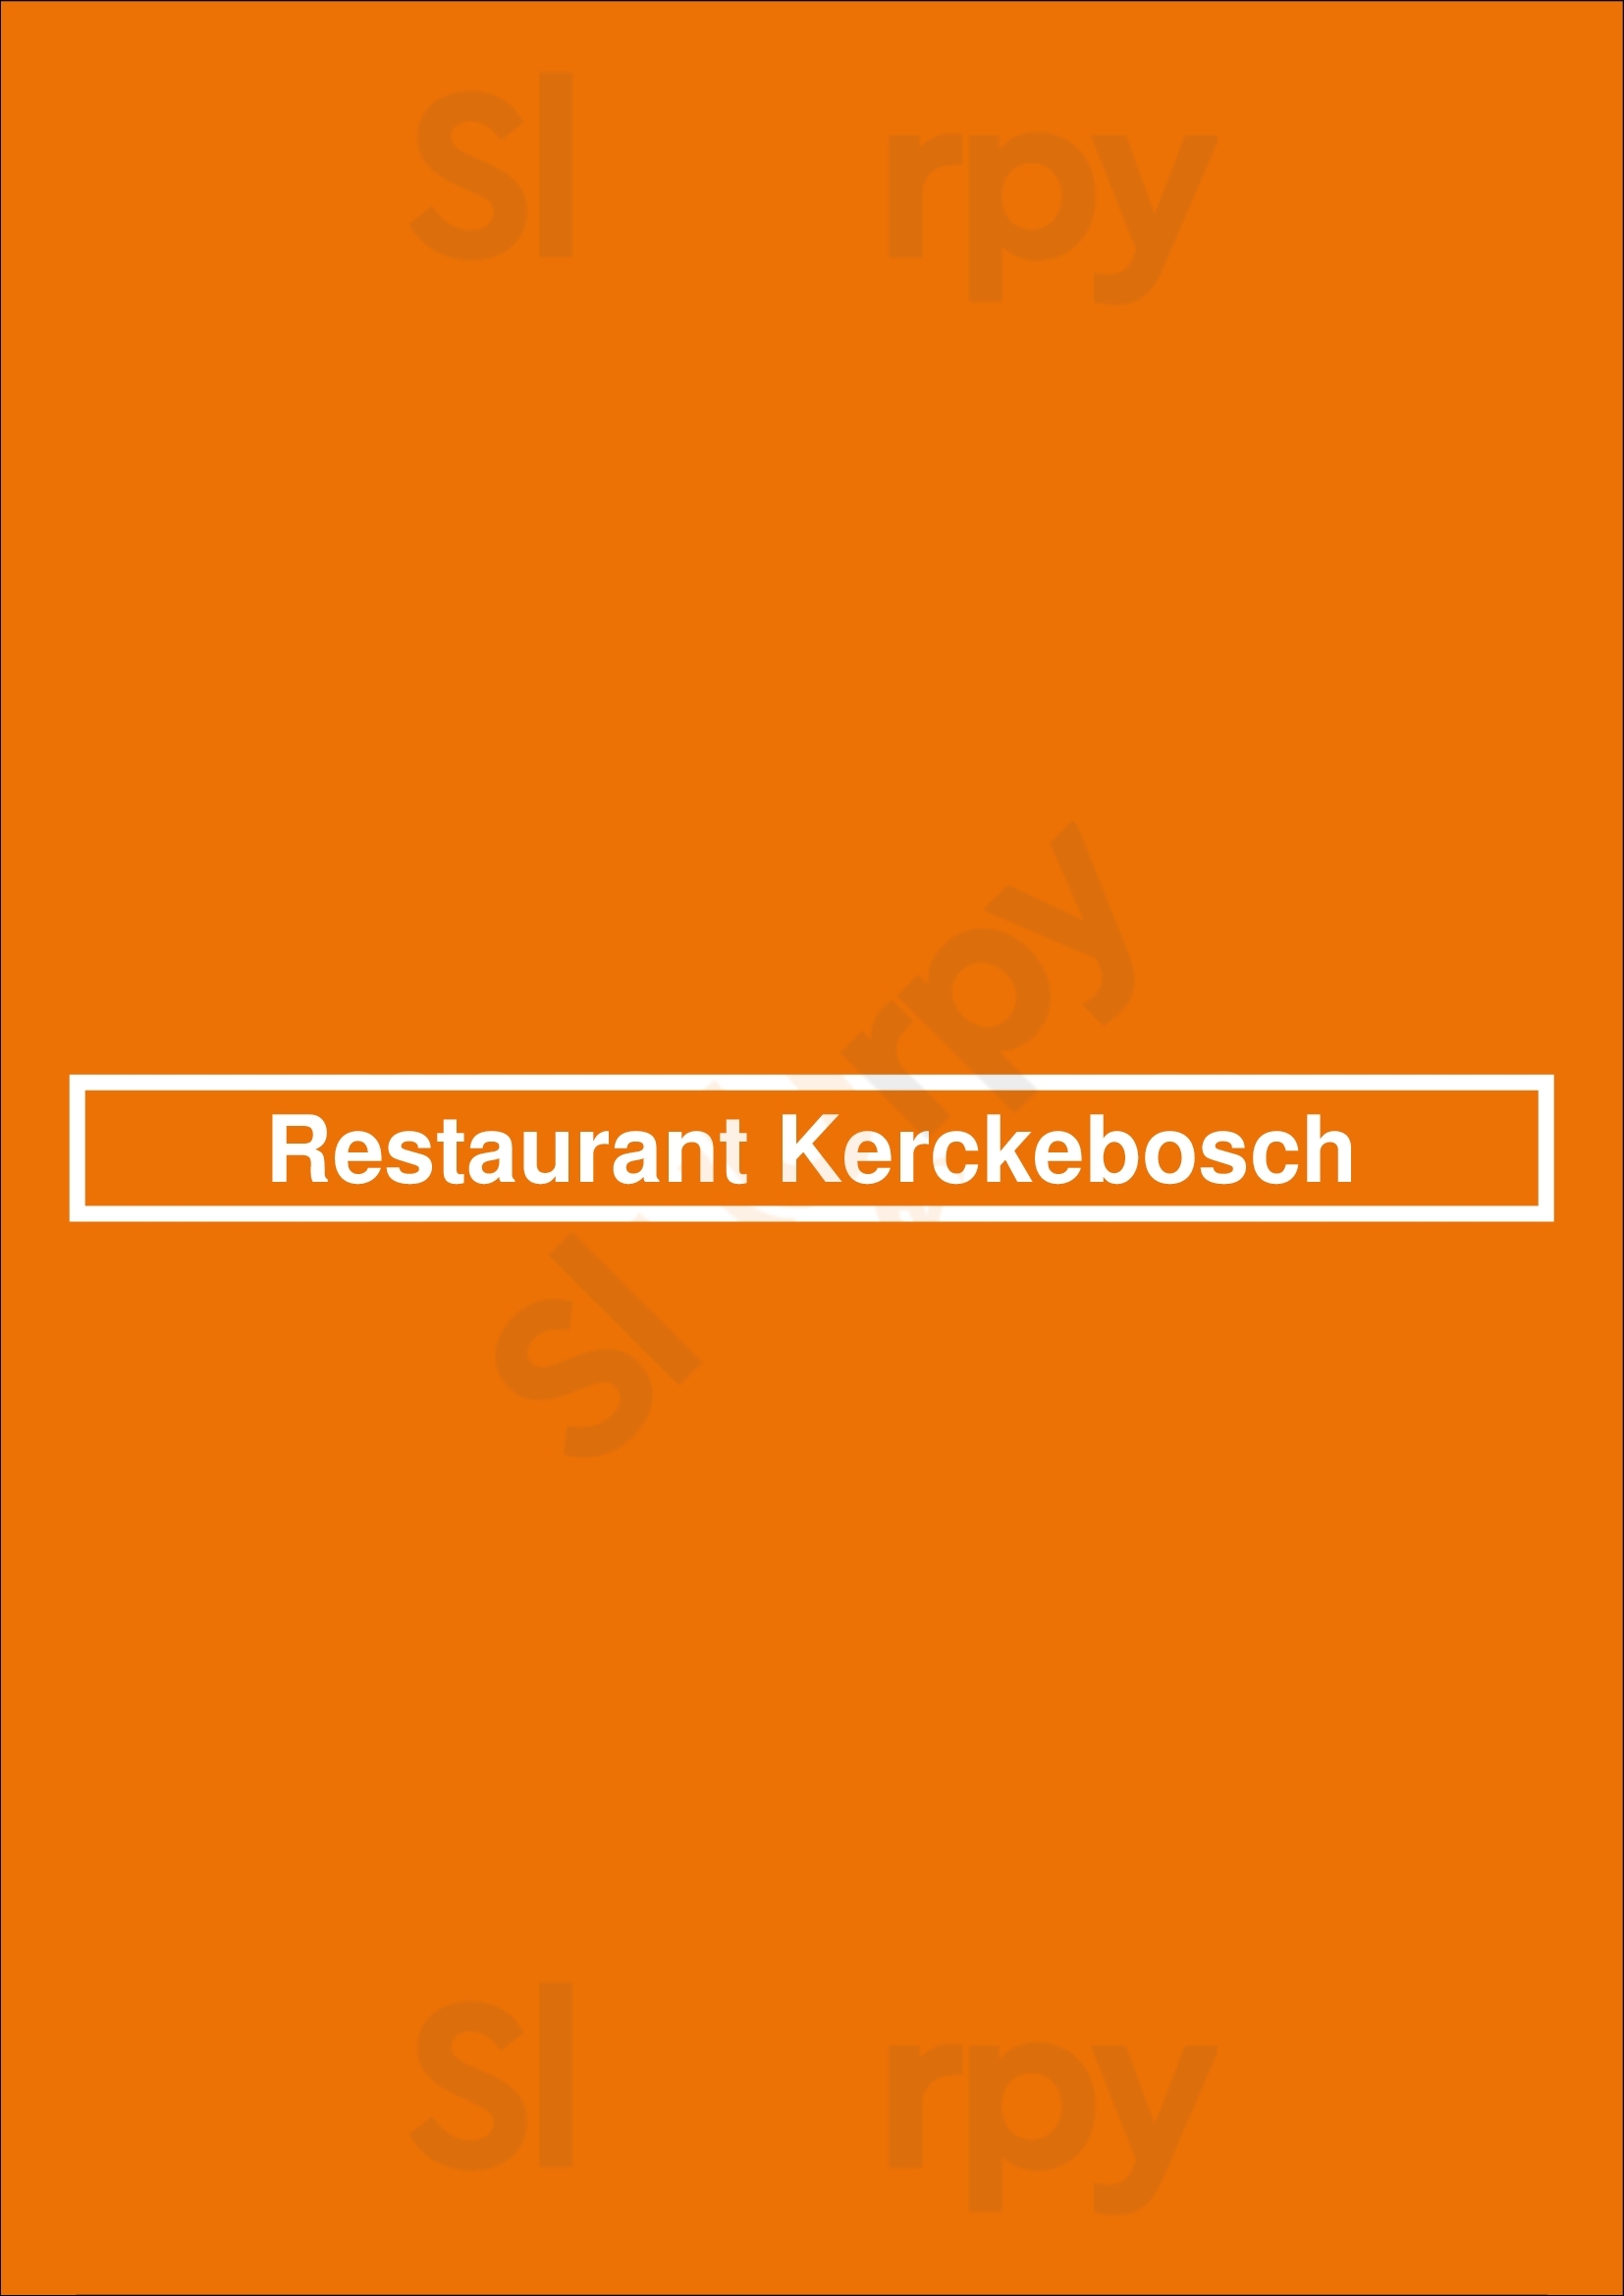 Restaurant Kerckebosch Zeist Menu - 1